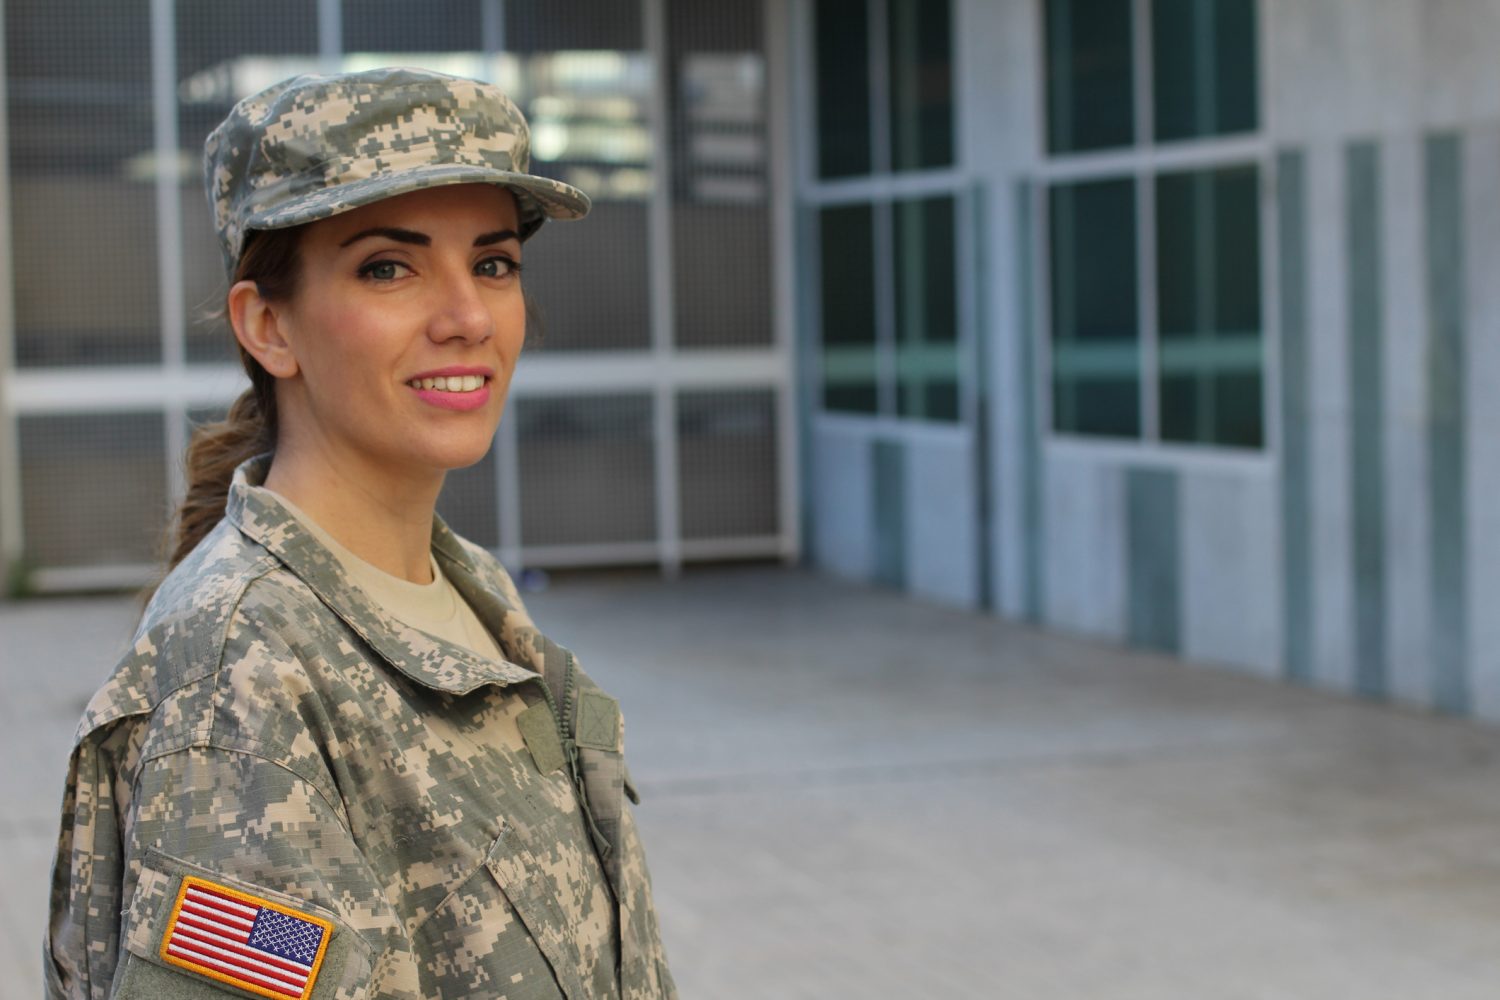 Military female smiling